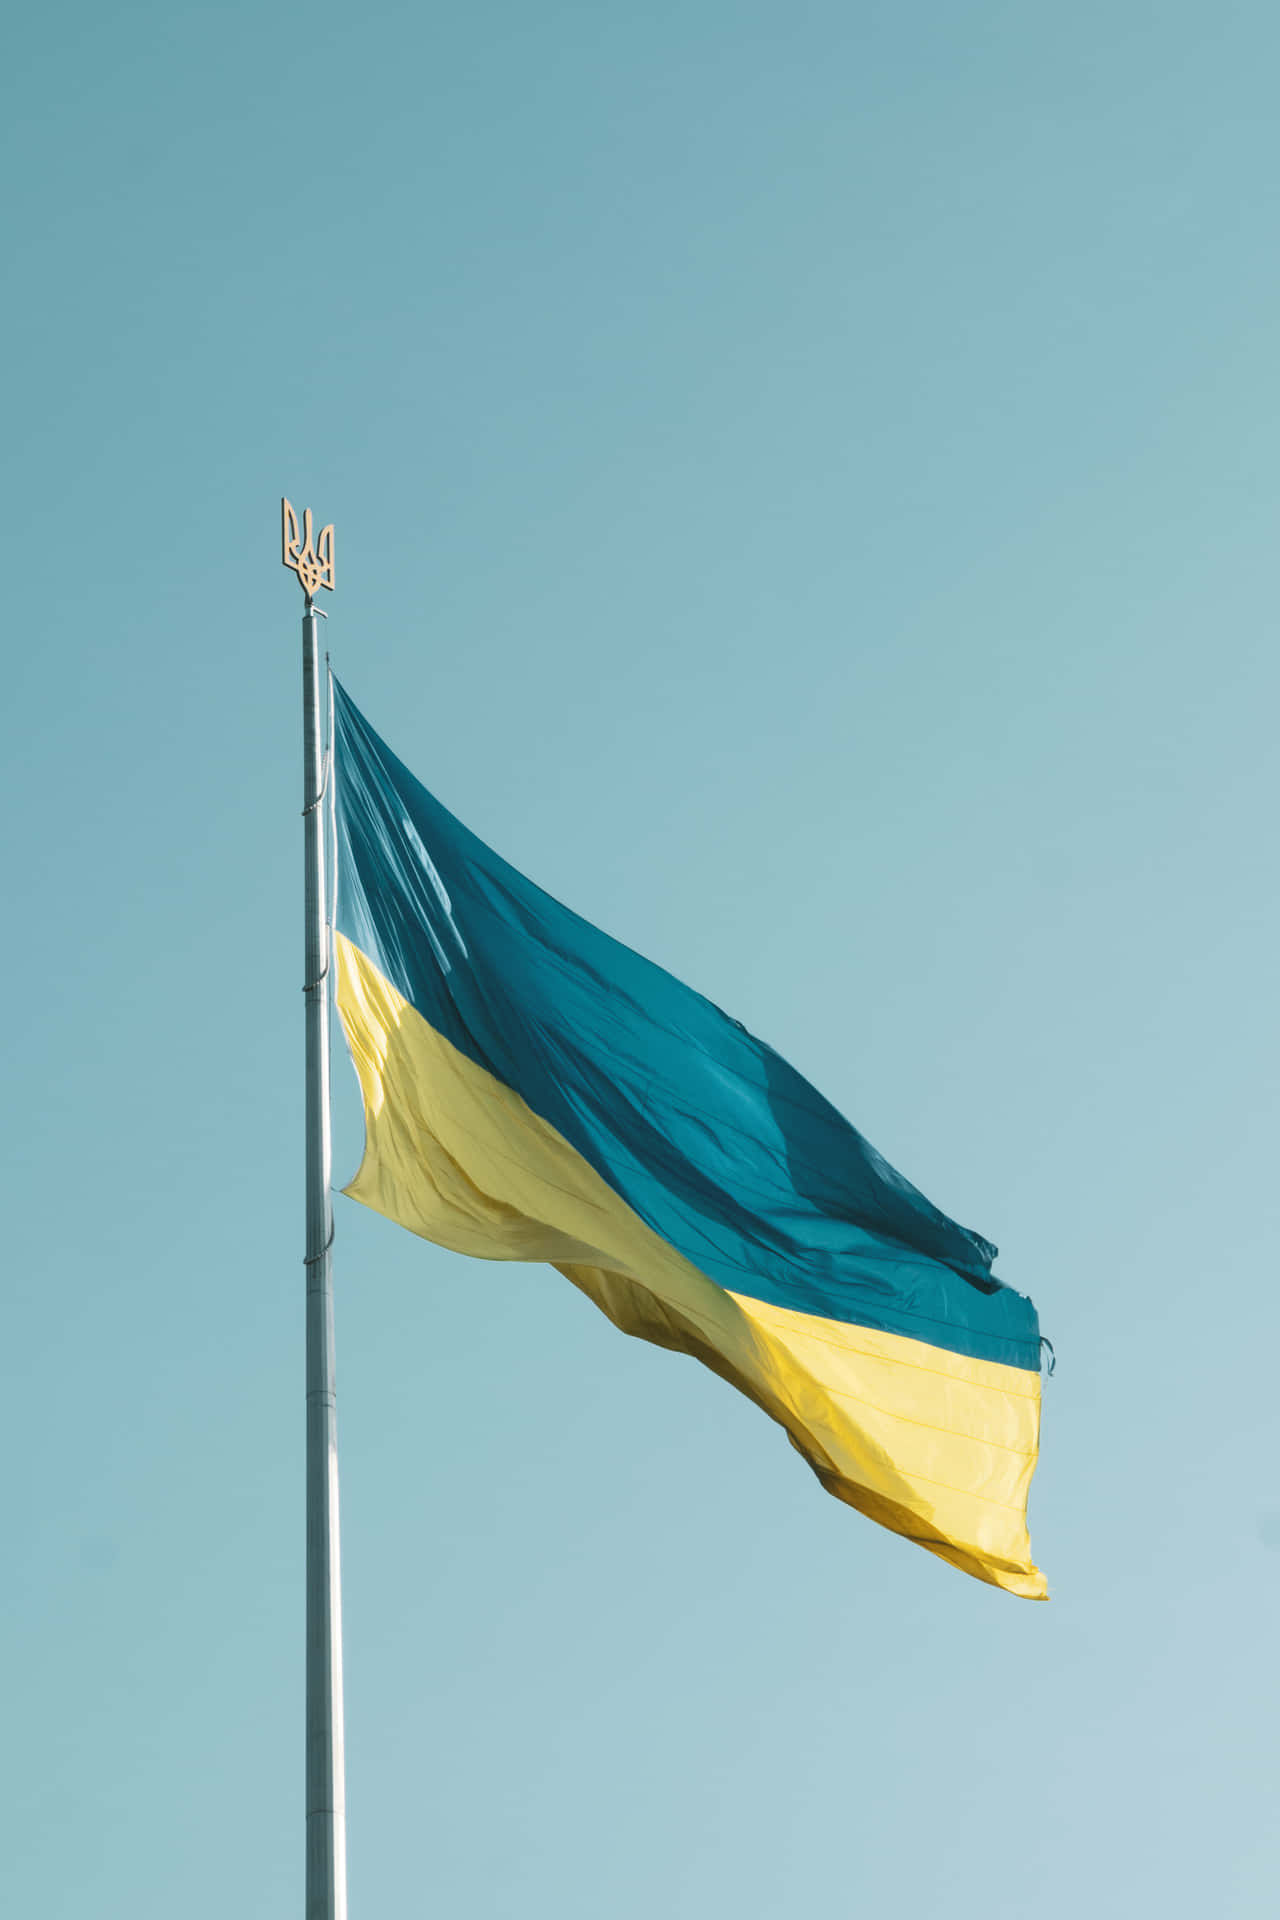 Glorious Accompaniment To The Skylines of Ukraine